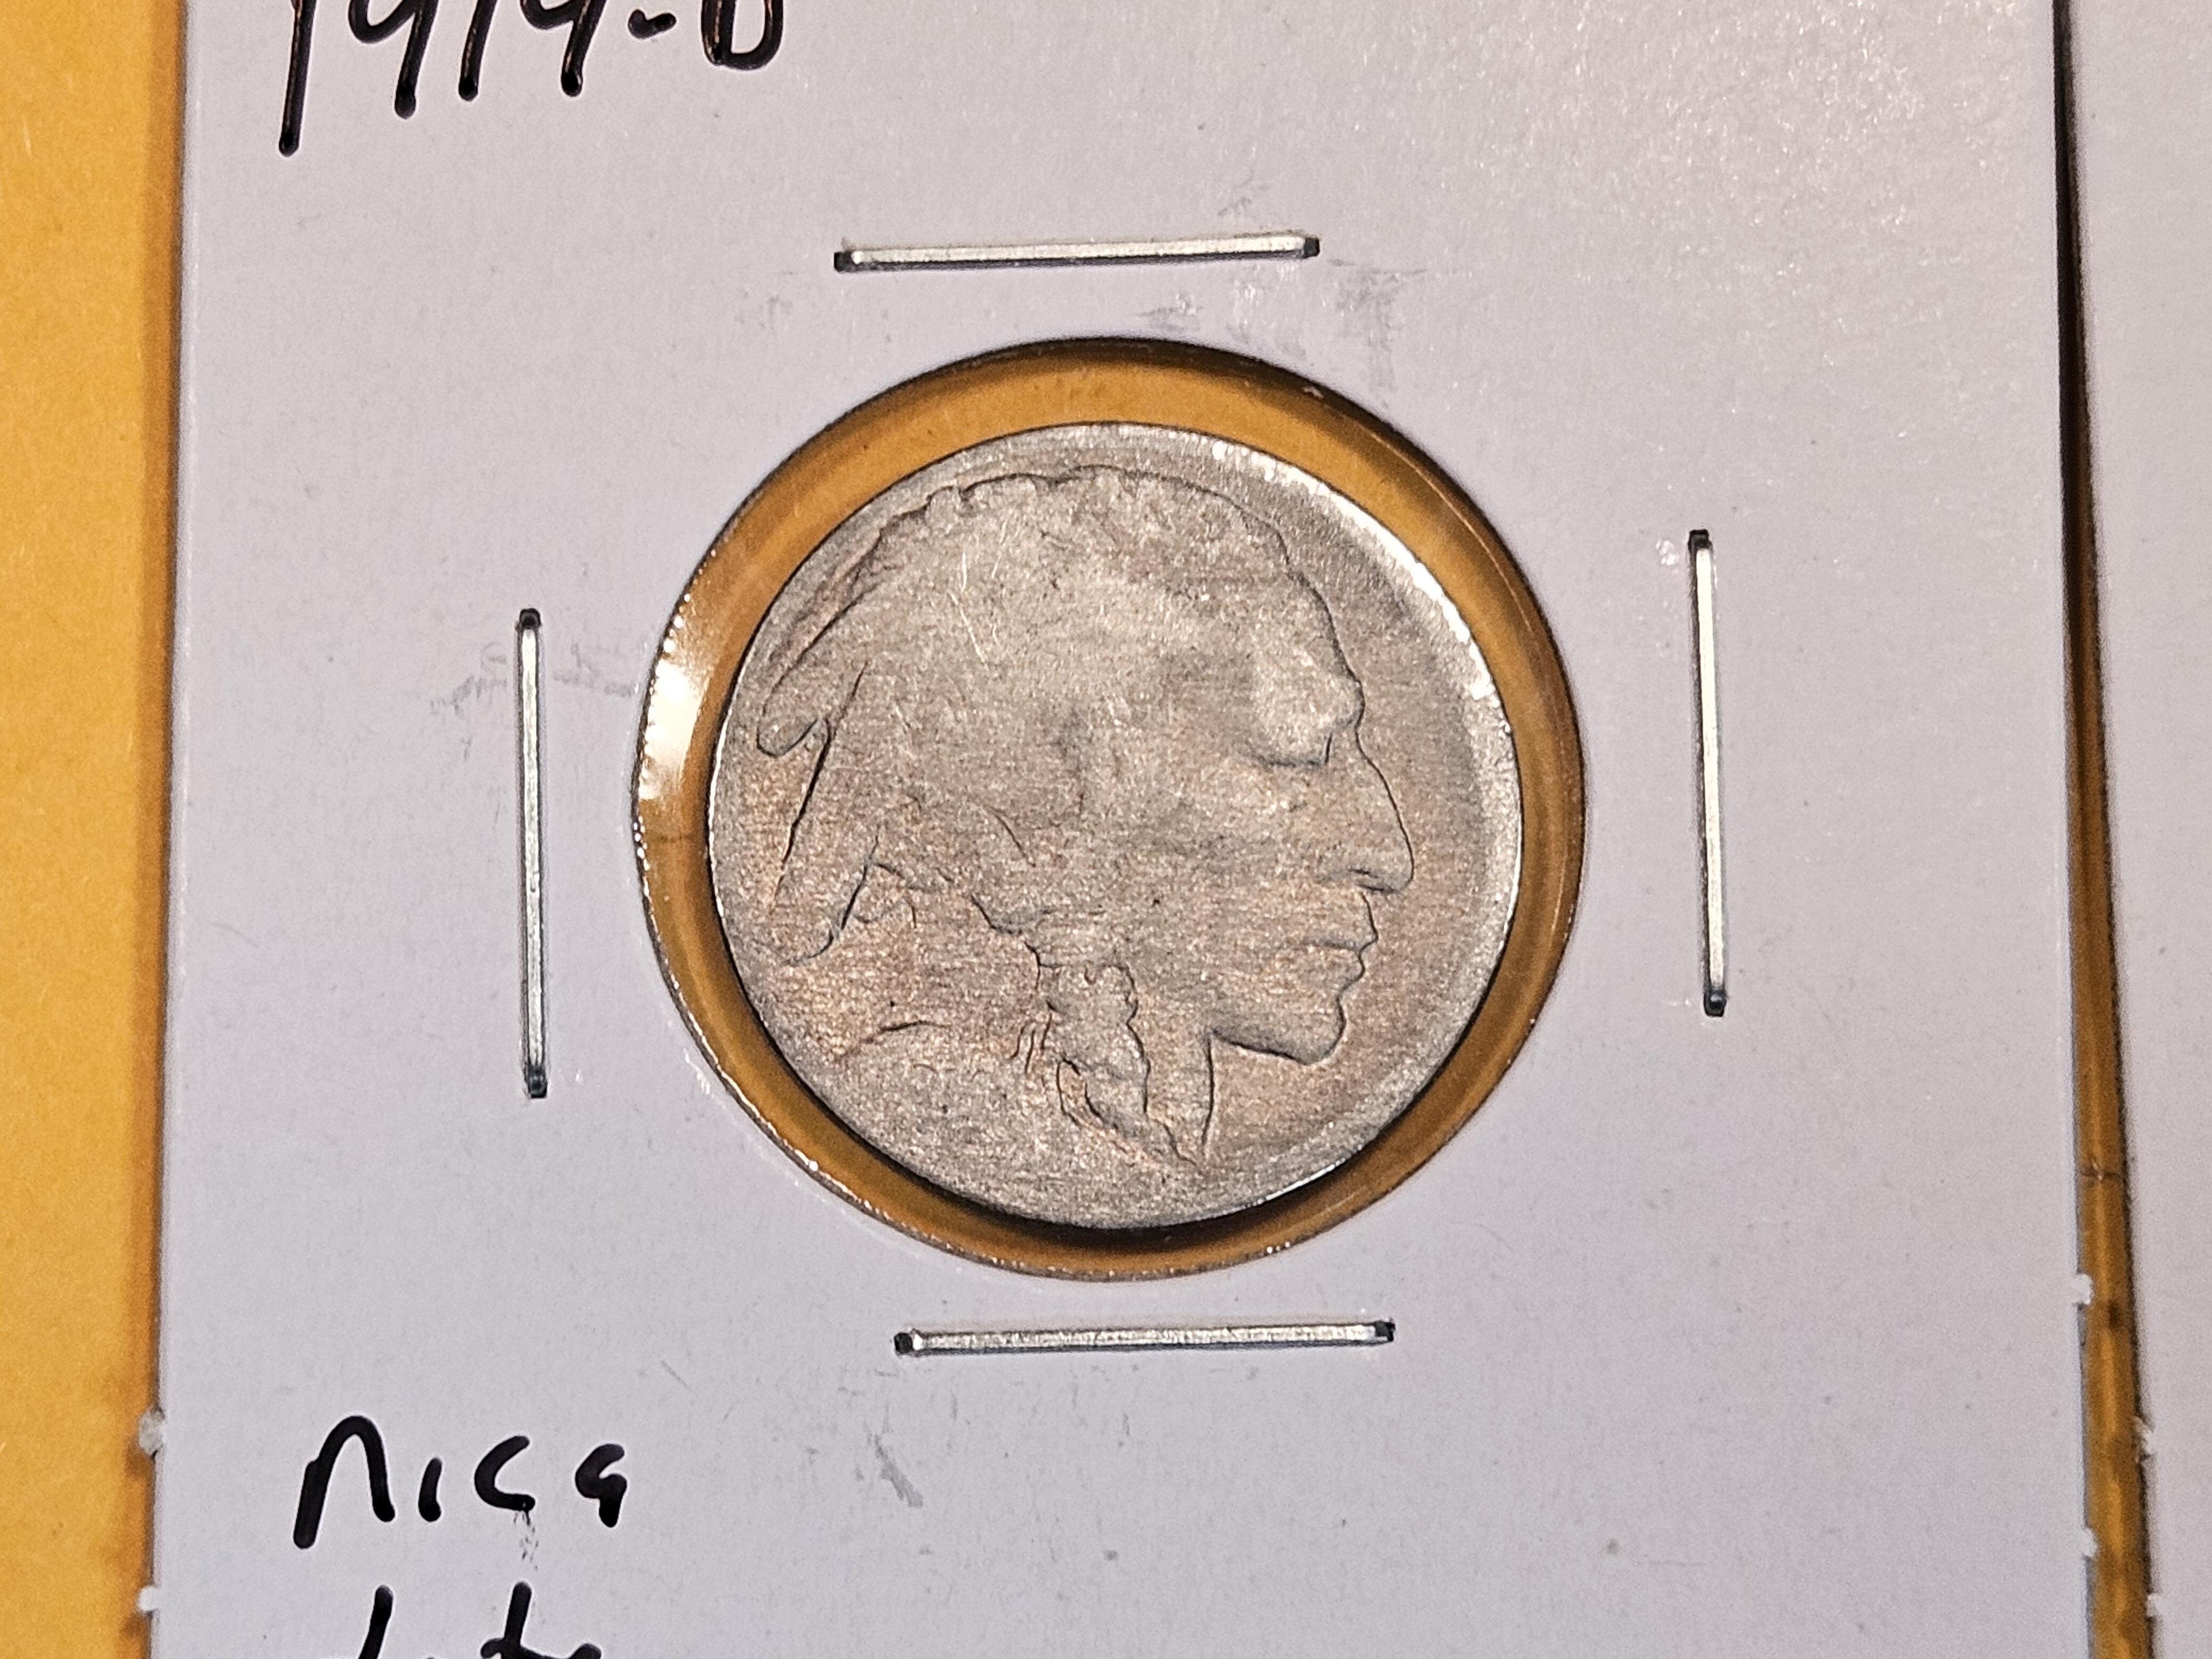 Six Mo-Betta Buffalo Nickels